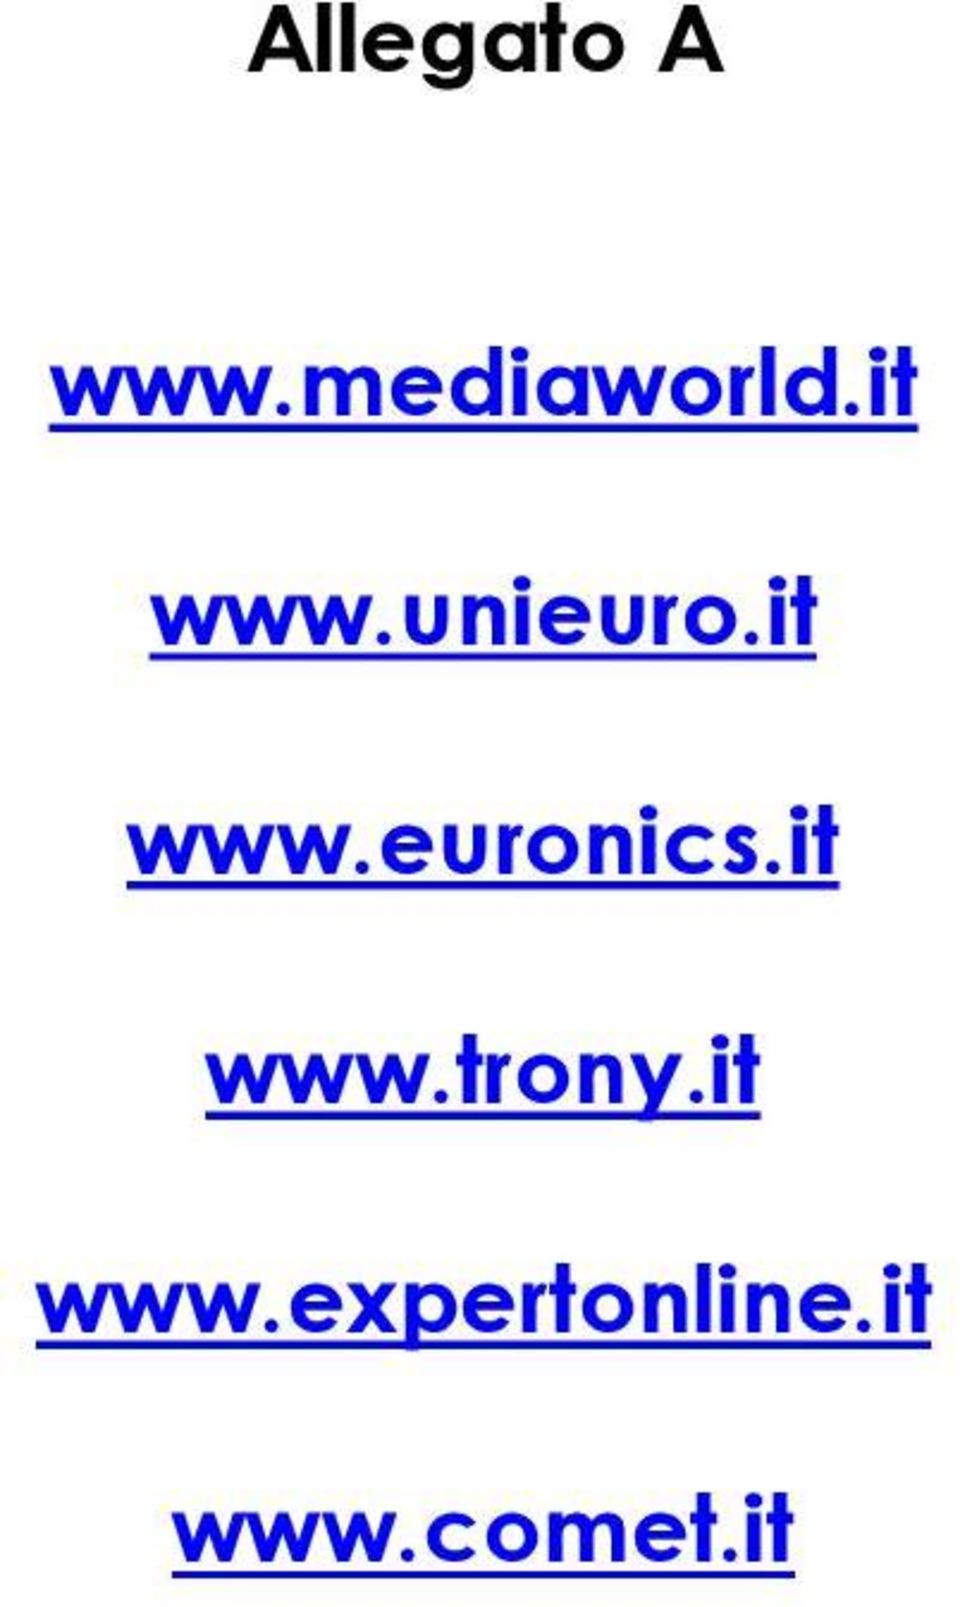 it www.trony.it www.expertonline.